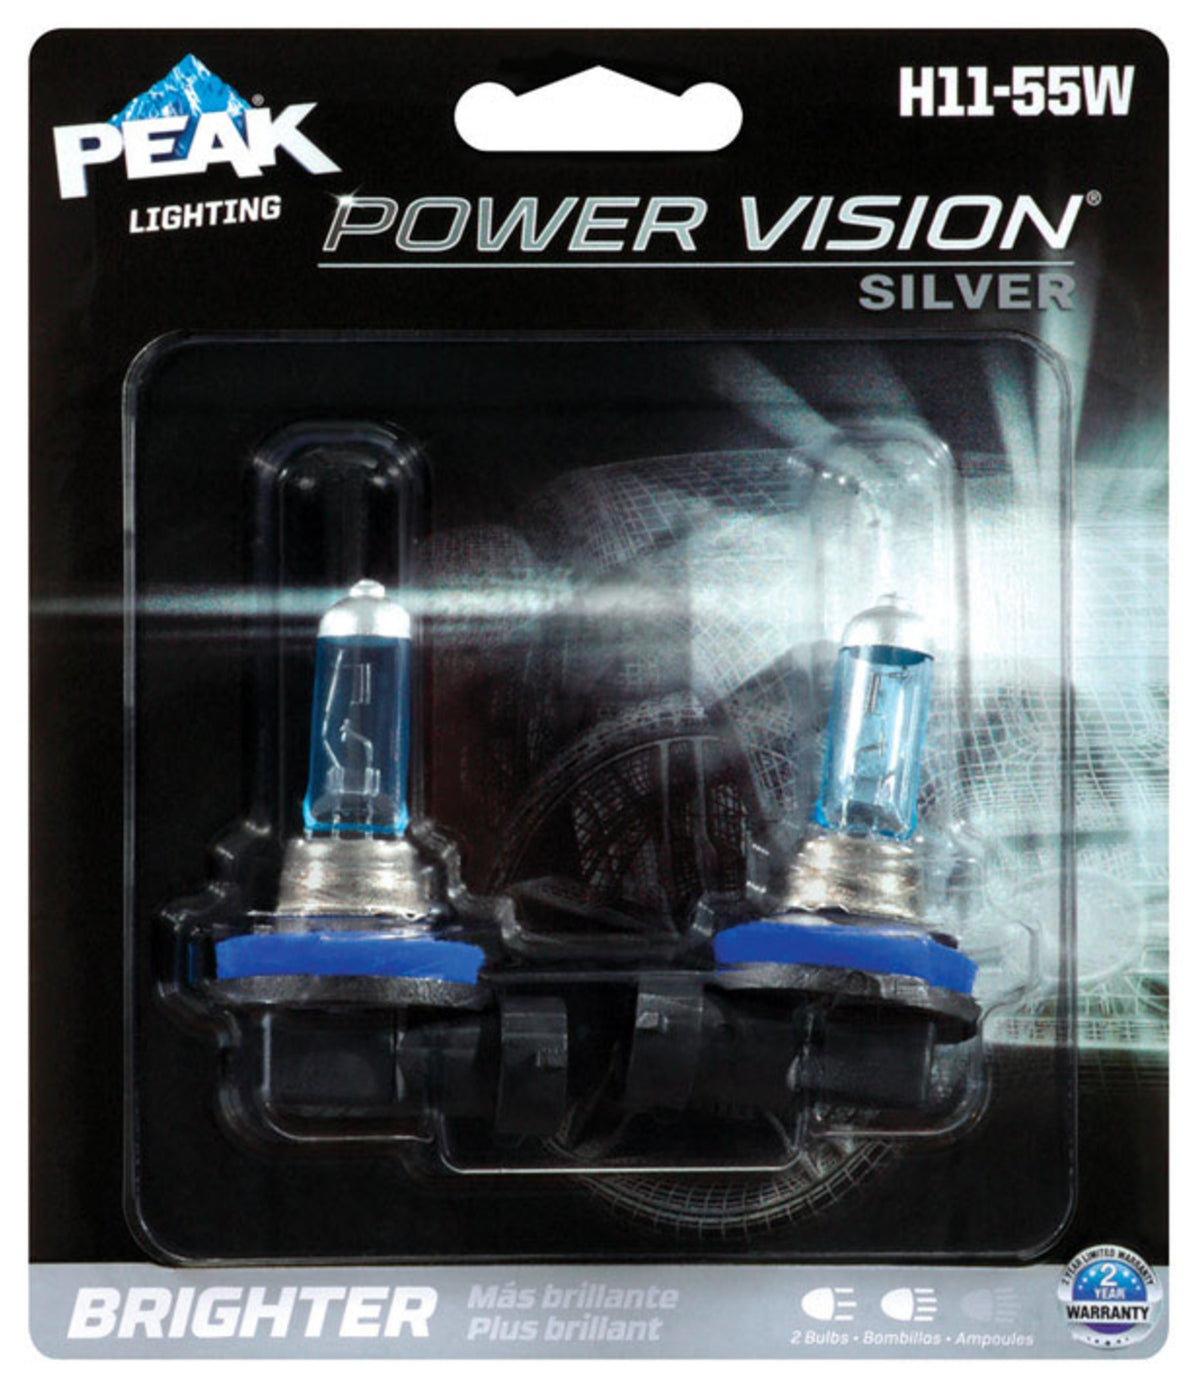 Peak H11-55WPVS-2BPP Power Vision Halogen Automotive Bulbs, 13.2 Volts